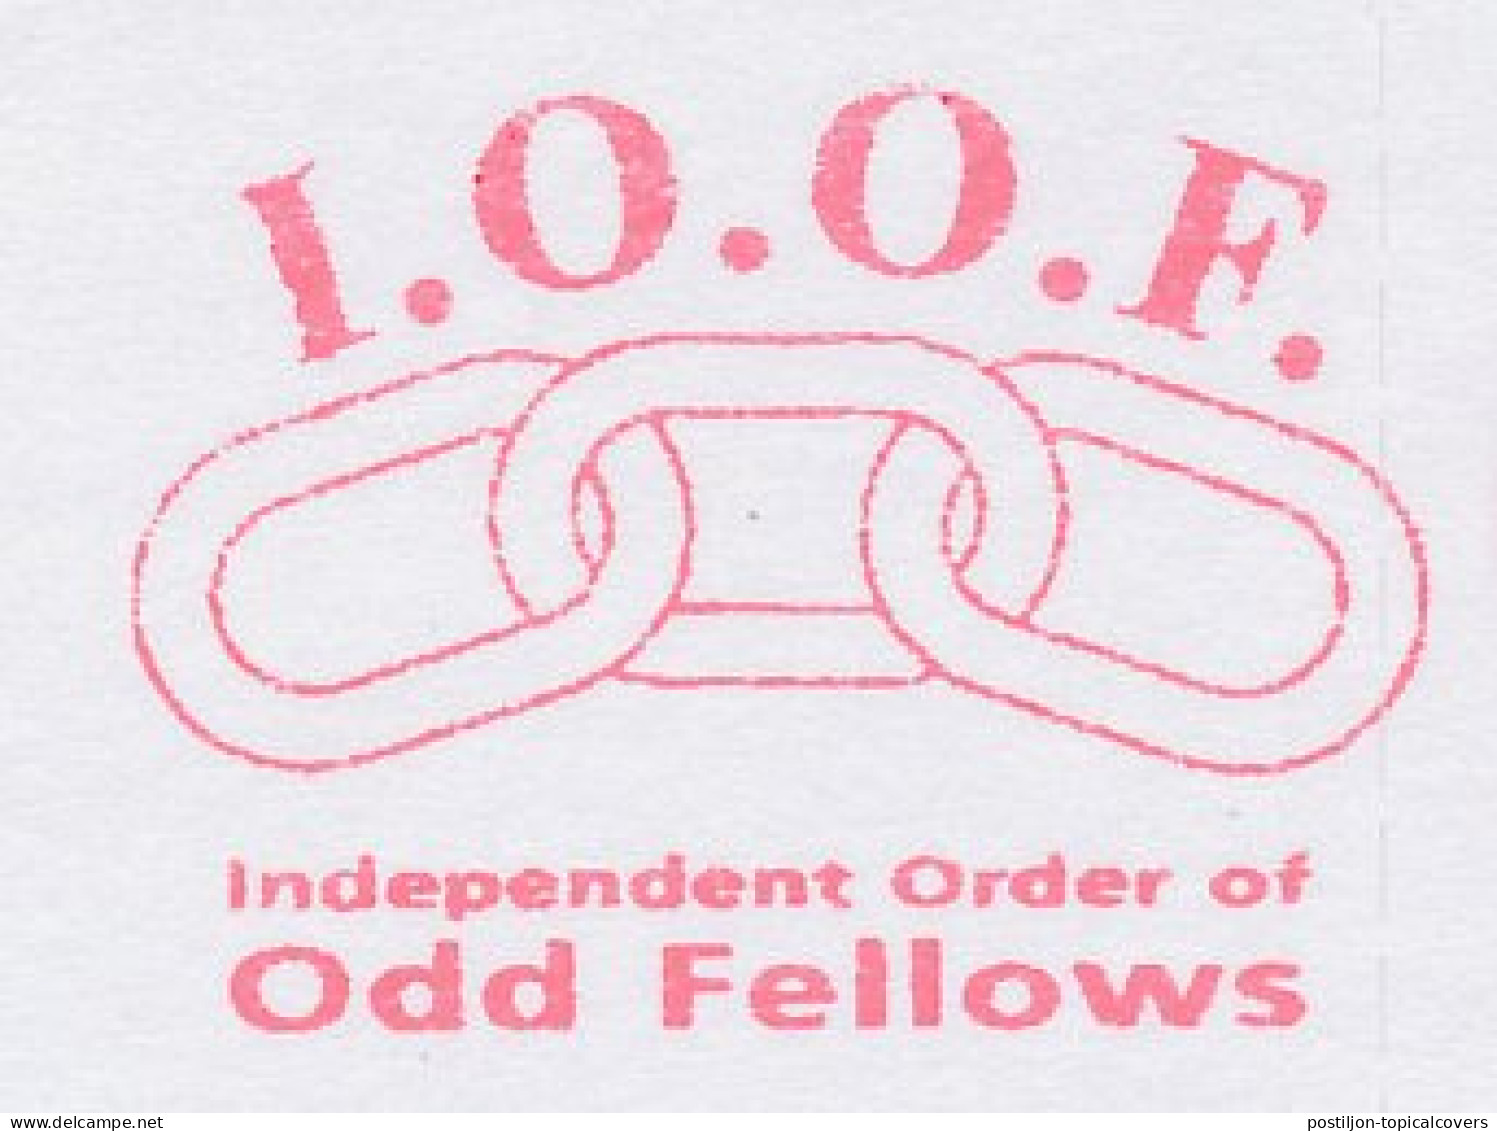 Meter Proof / Test Strip FRAMA Supplier Netherlands I.O.O.F - Independent Order Of Odd Fellows - Vrijmetselarij